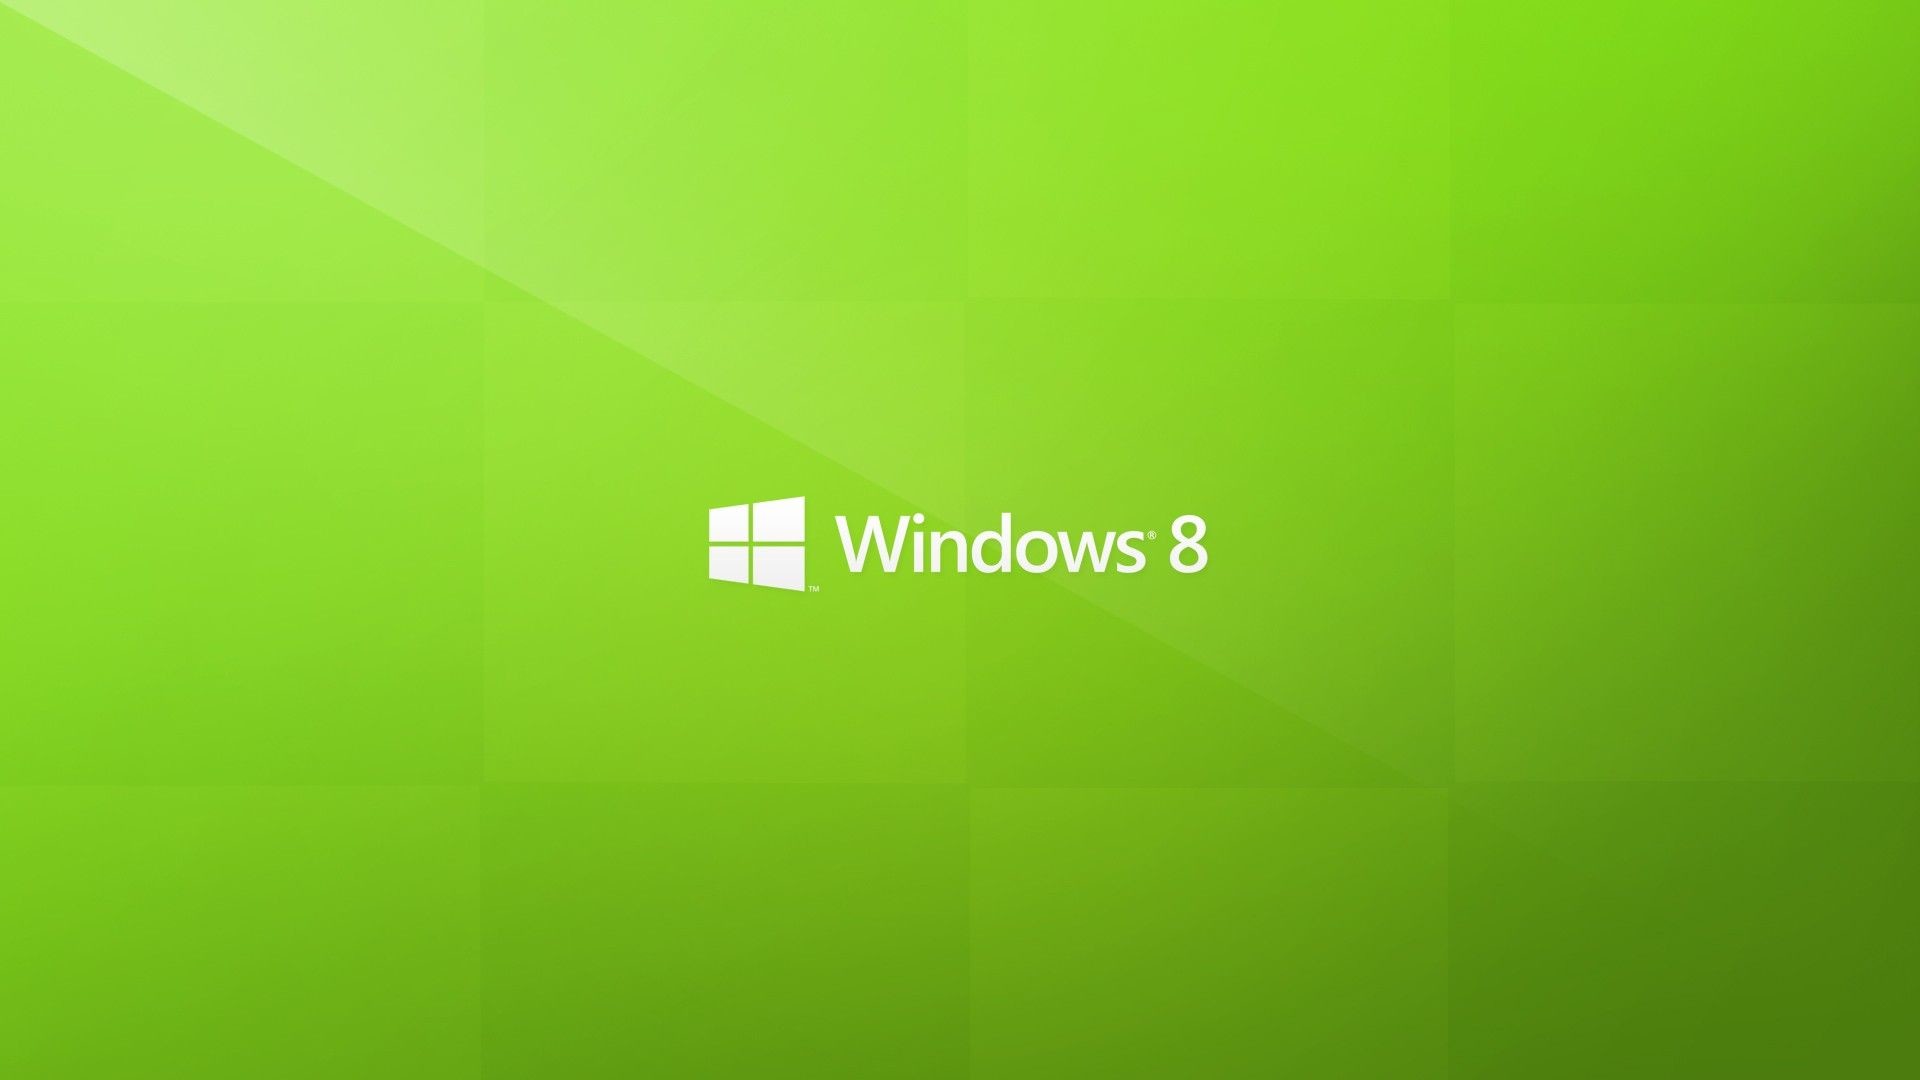 1920x1080 HD-Green-Windows-8-Wallpaper.jpg